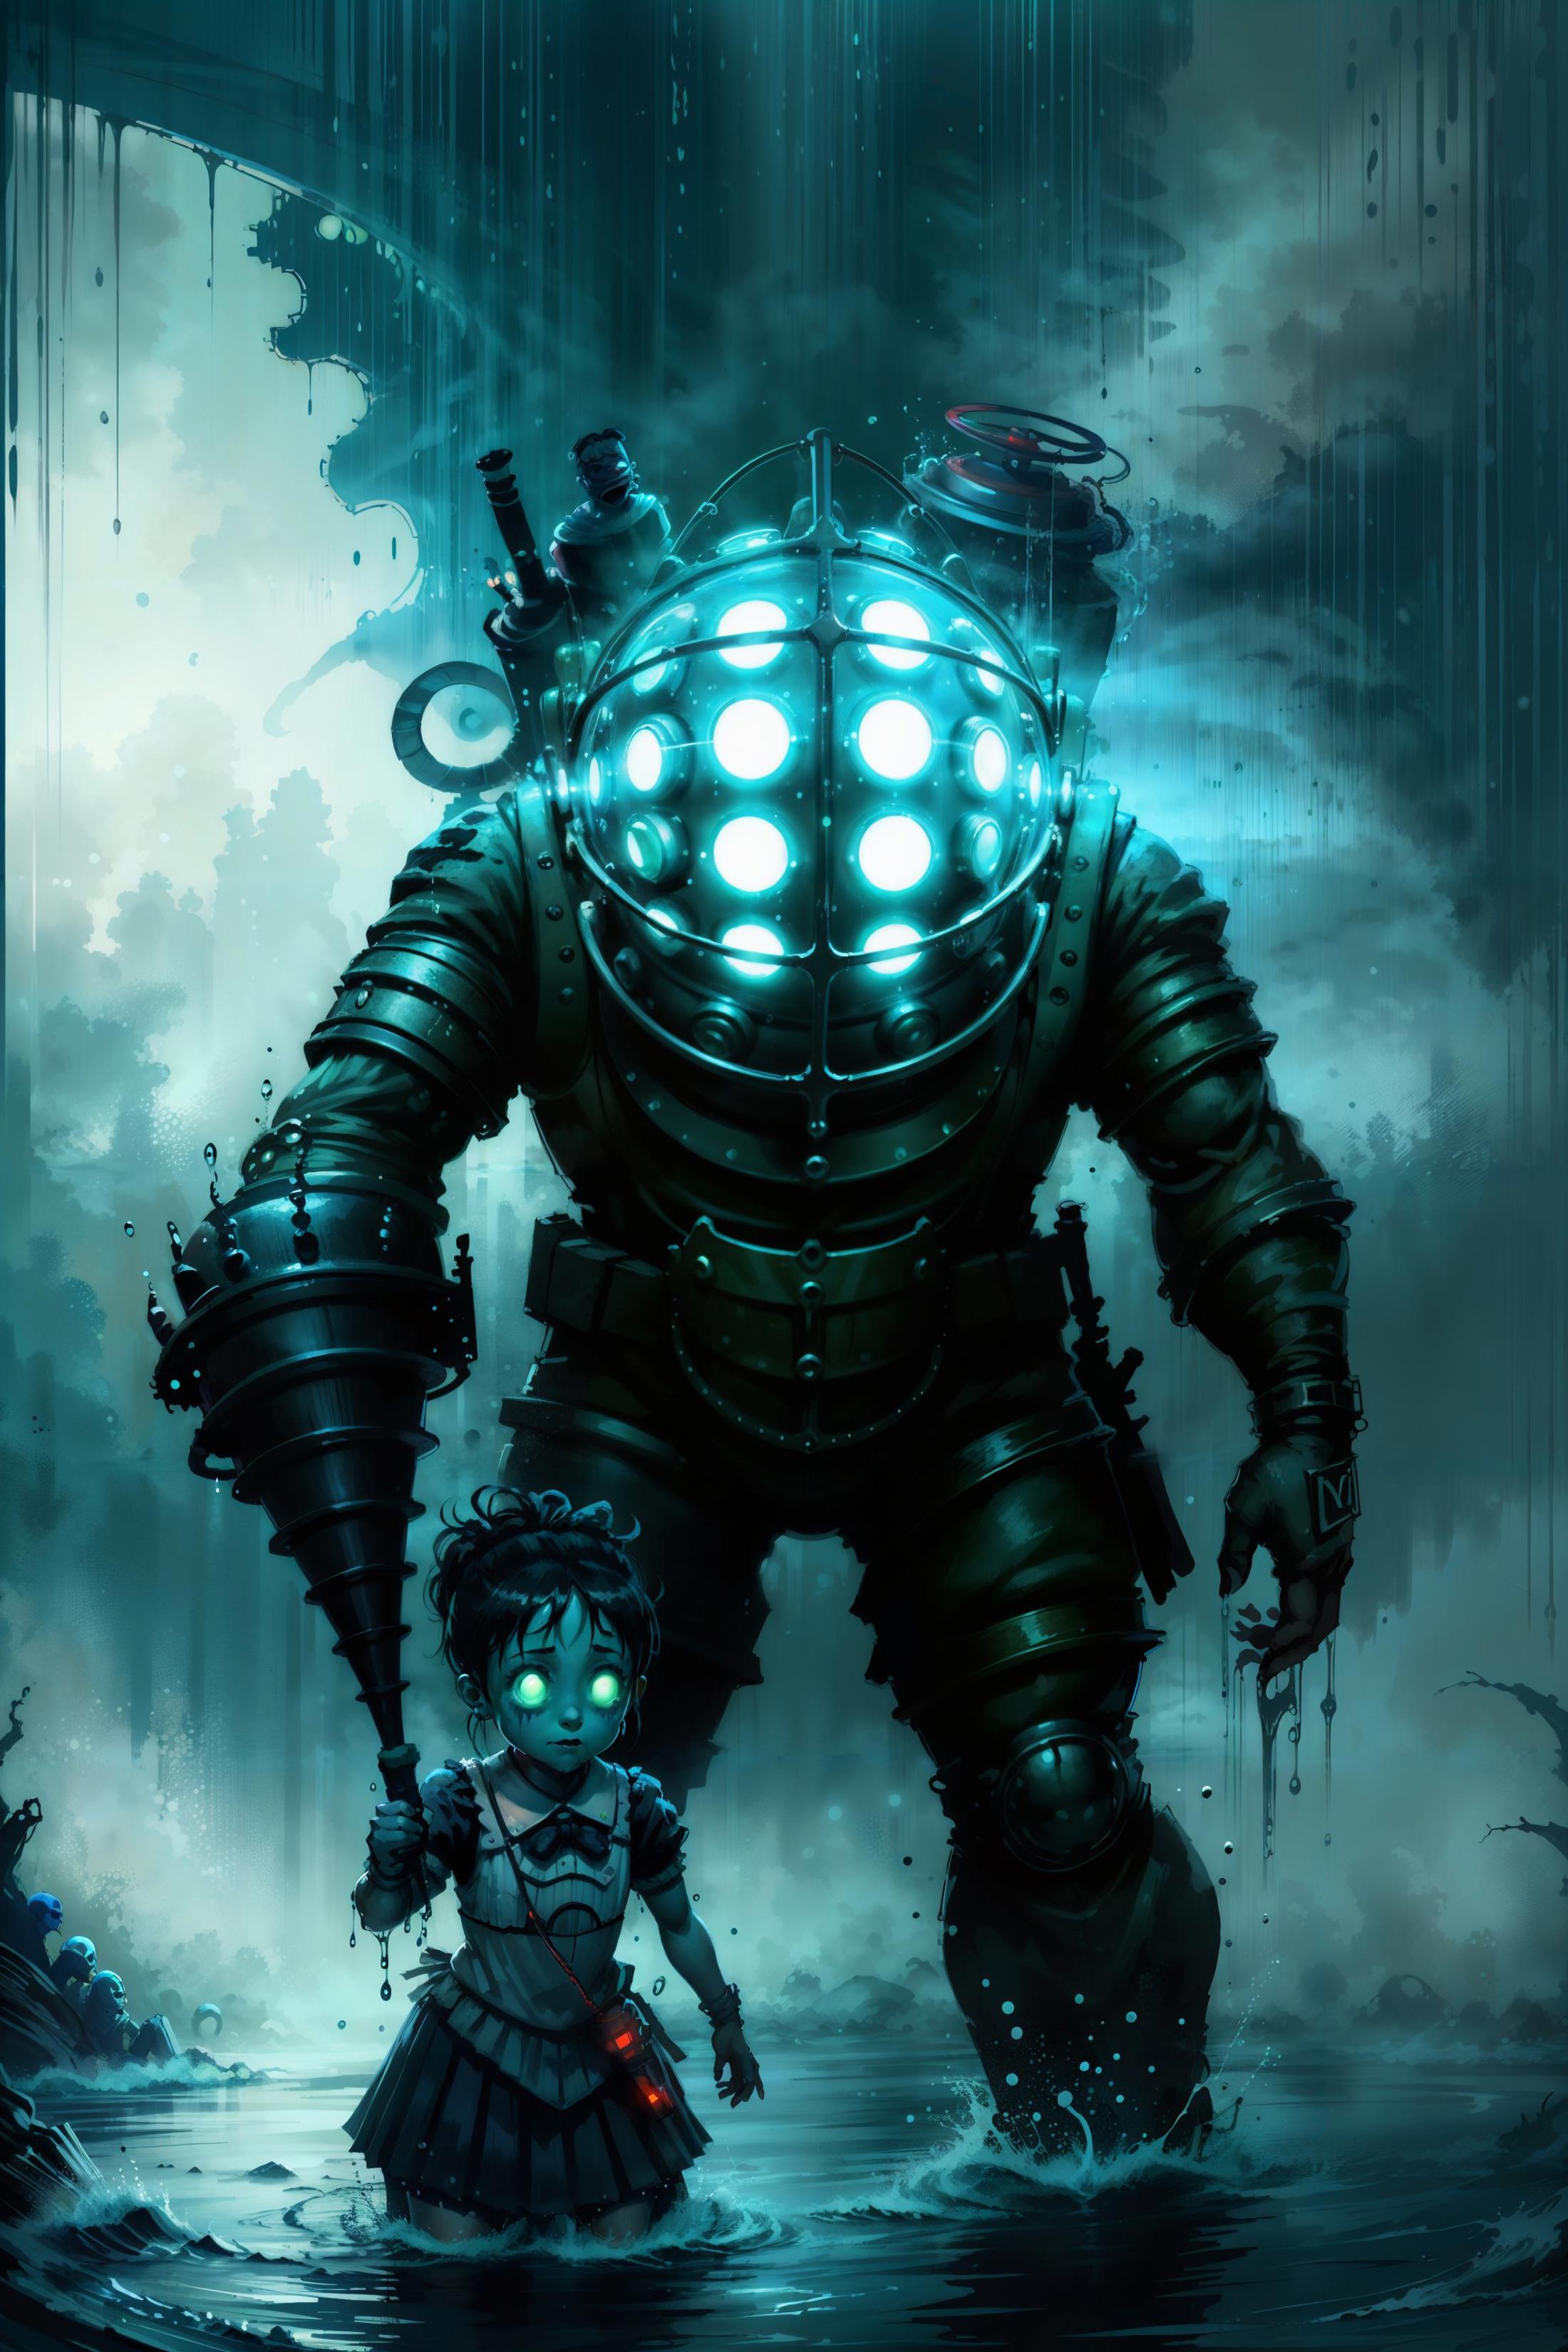 Big Daddy | BioShock image by soul3142